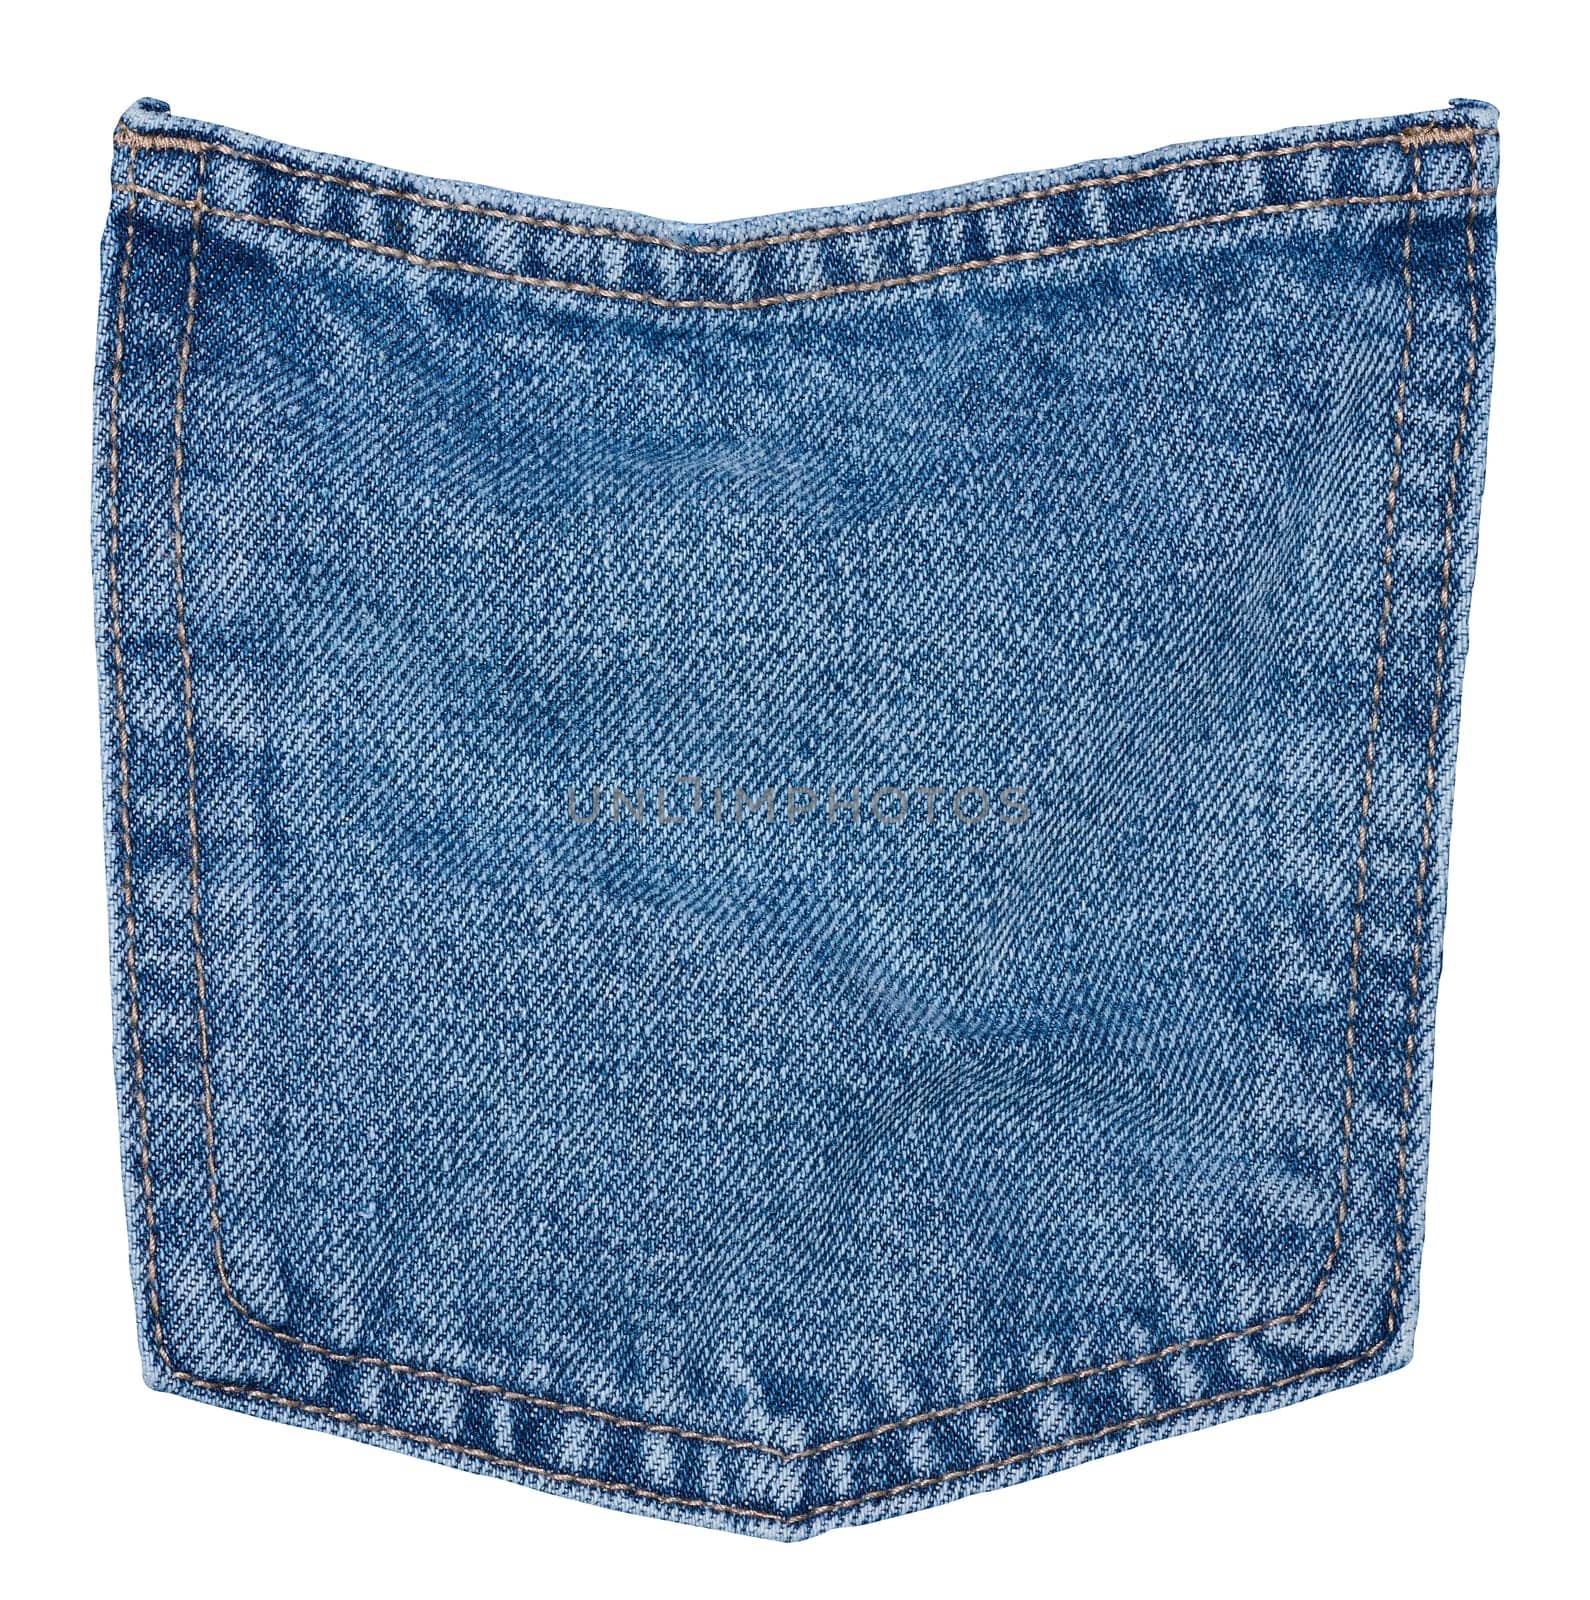 Back pocket of blue jeans on white background	 by ndanko